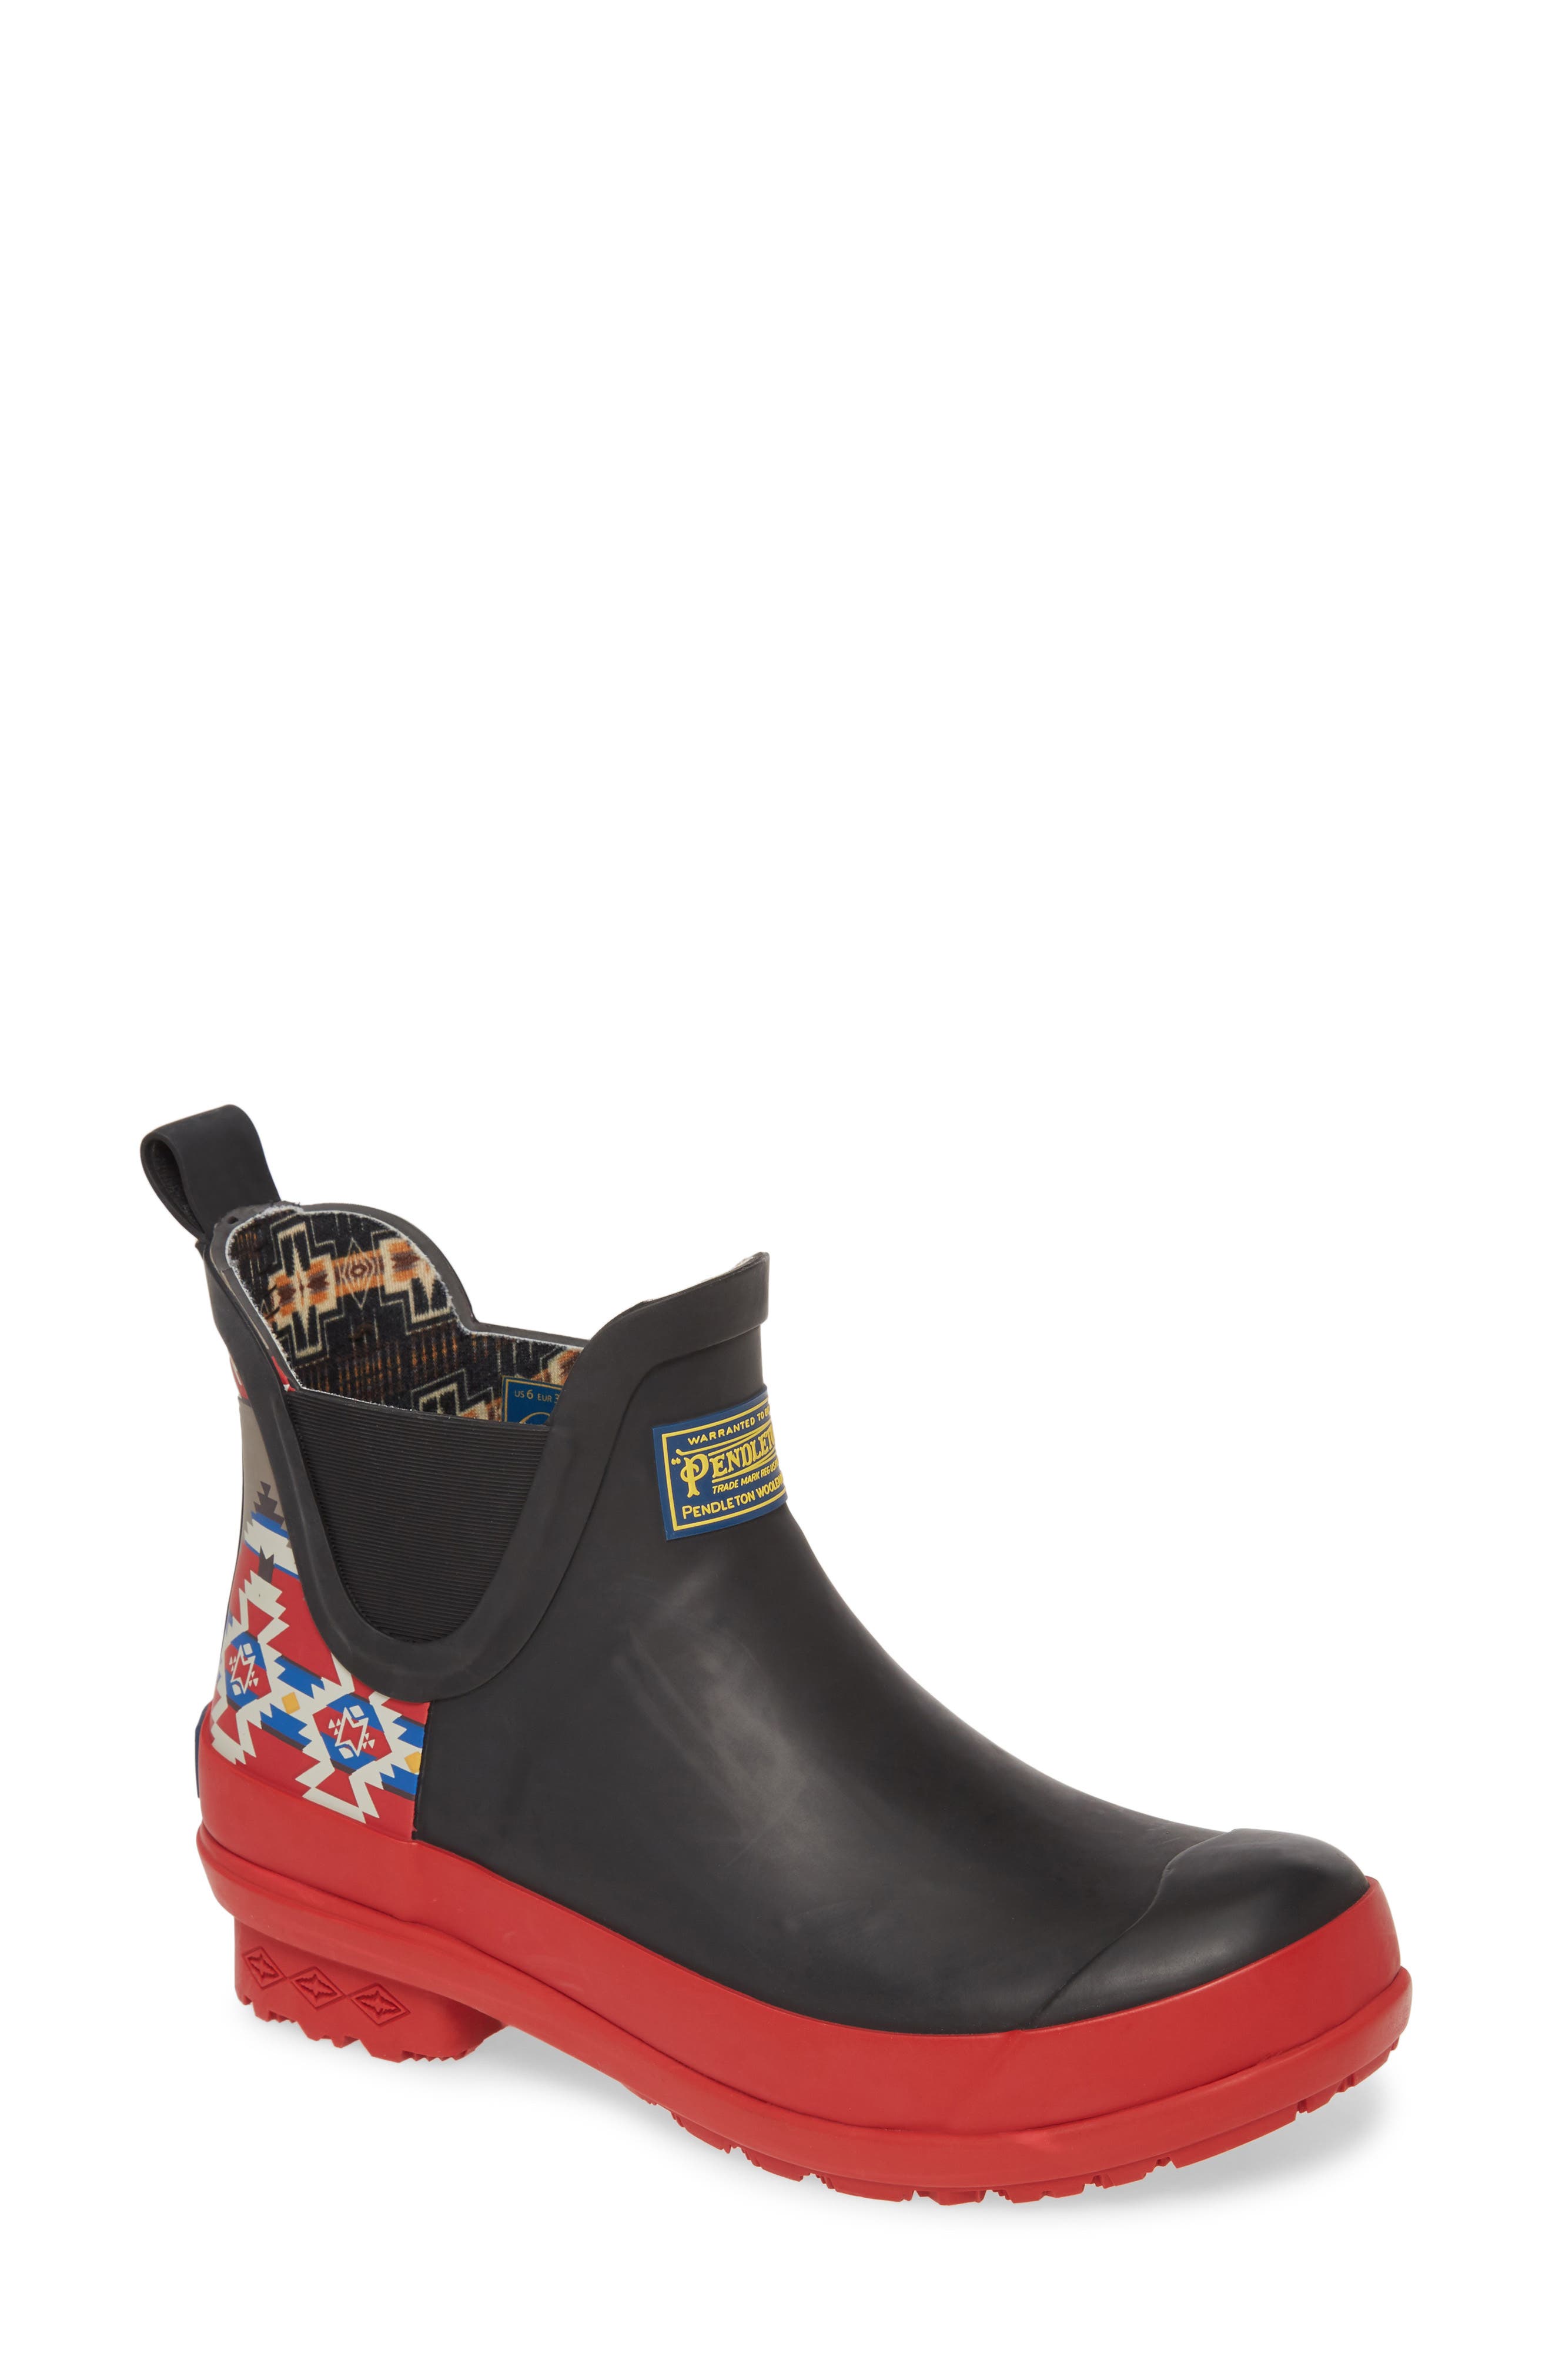 pendleton rubber boots